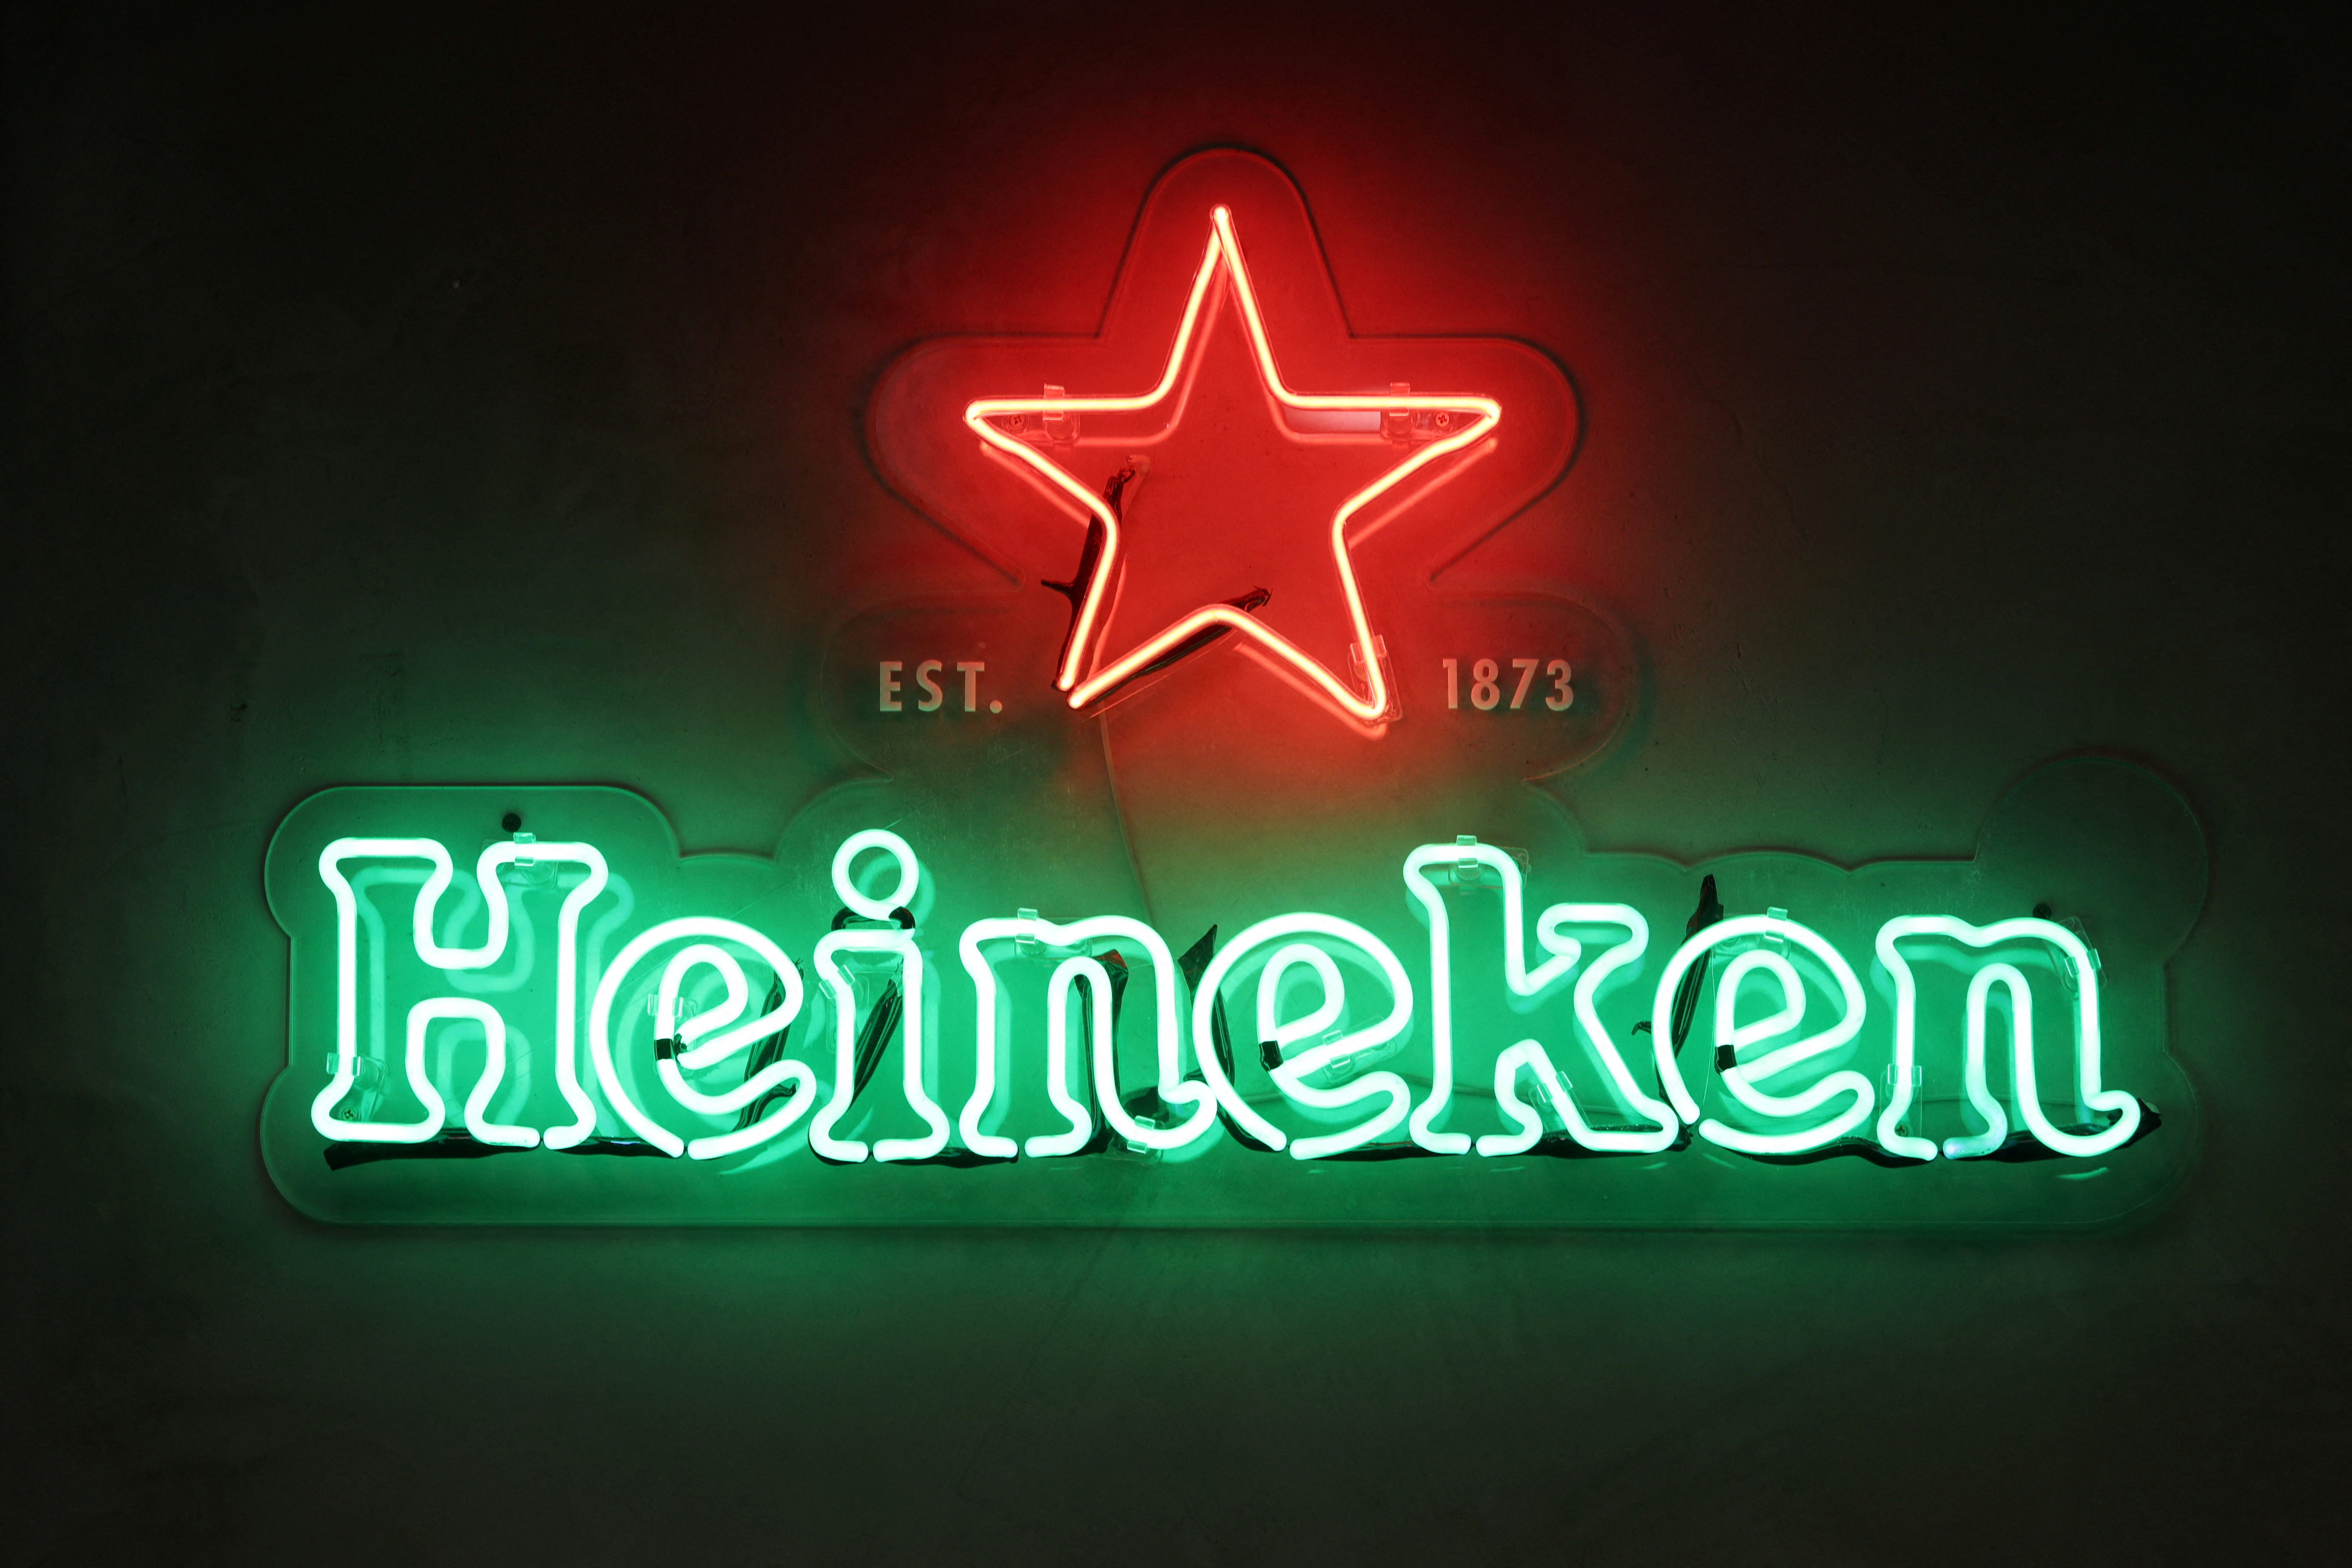 Heineken logo is seen at the company's building in Sao Paulo